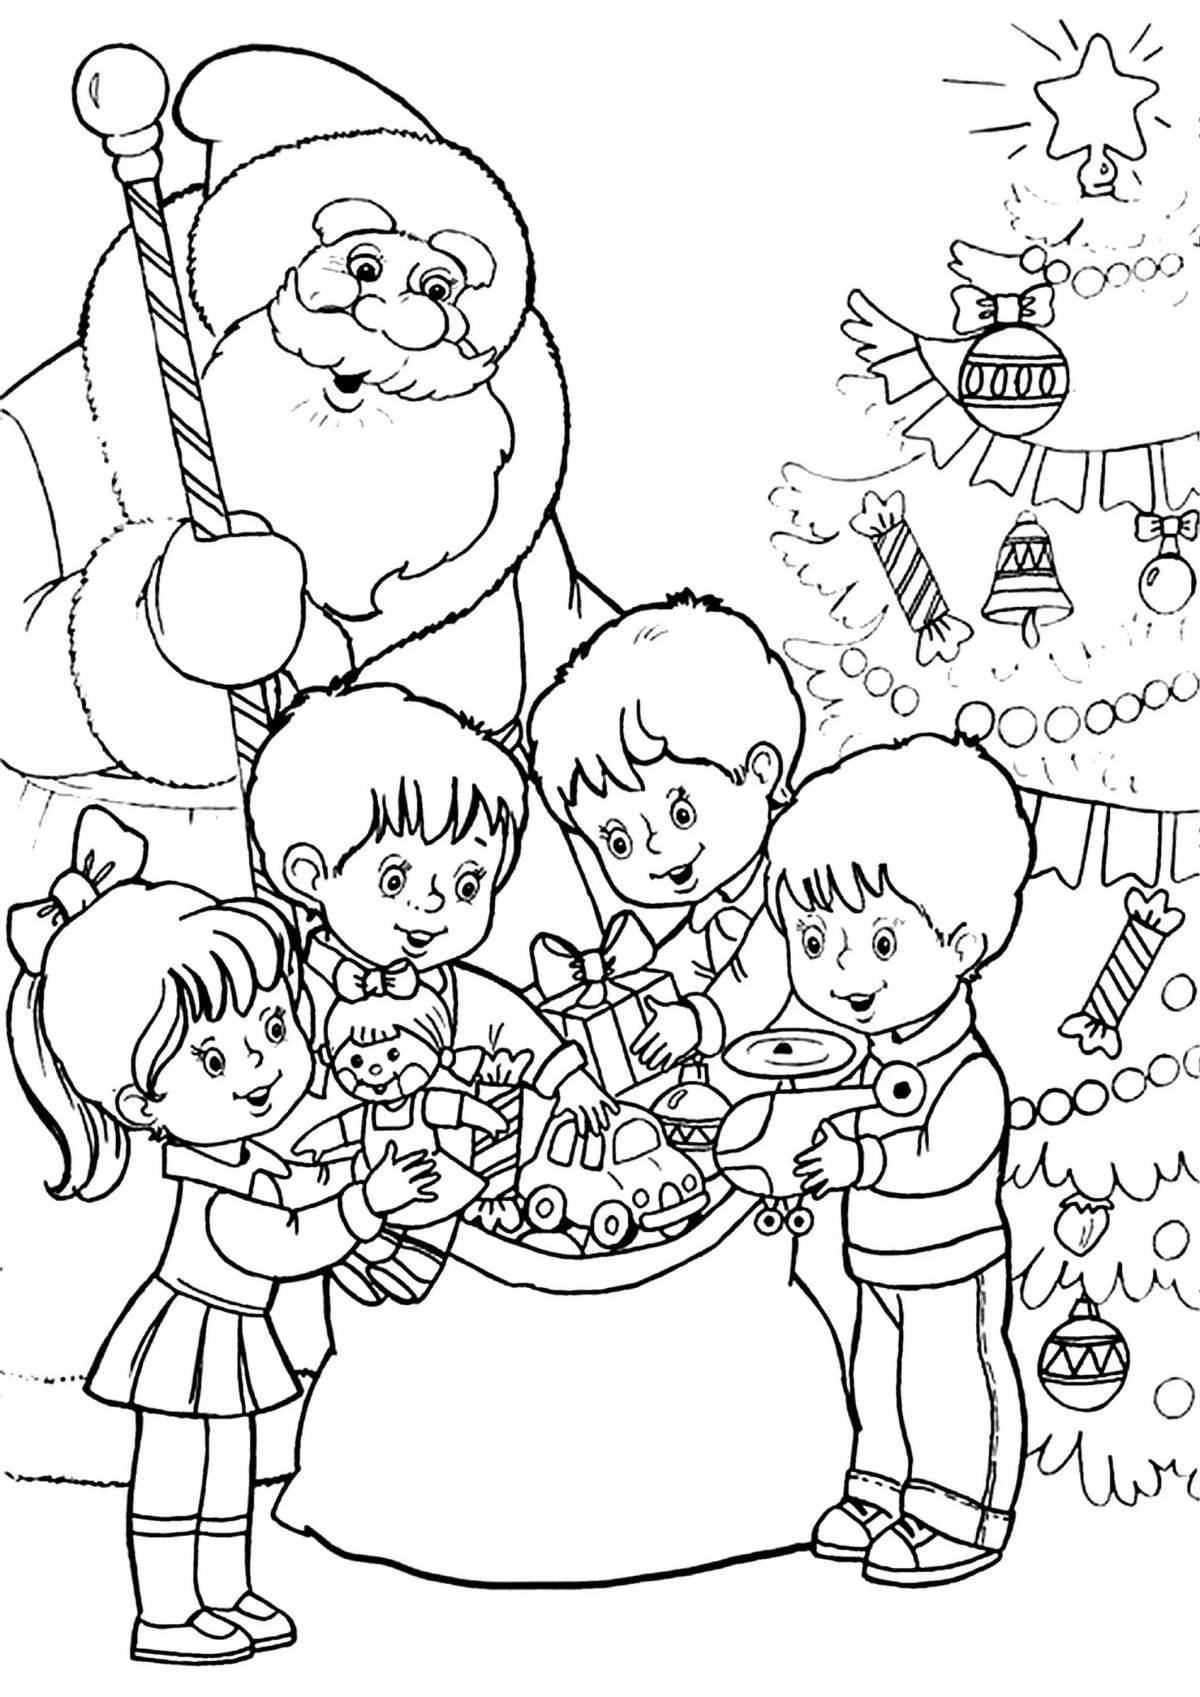 Merry children's Christmas drawing